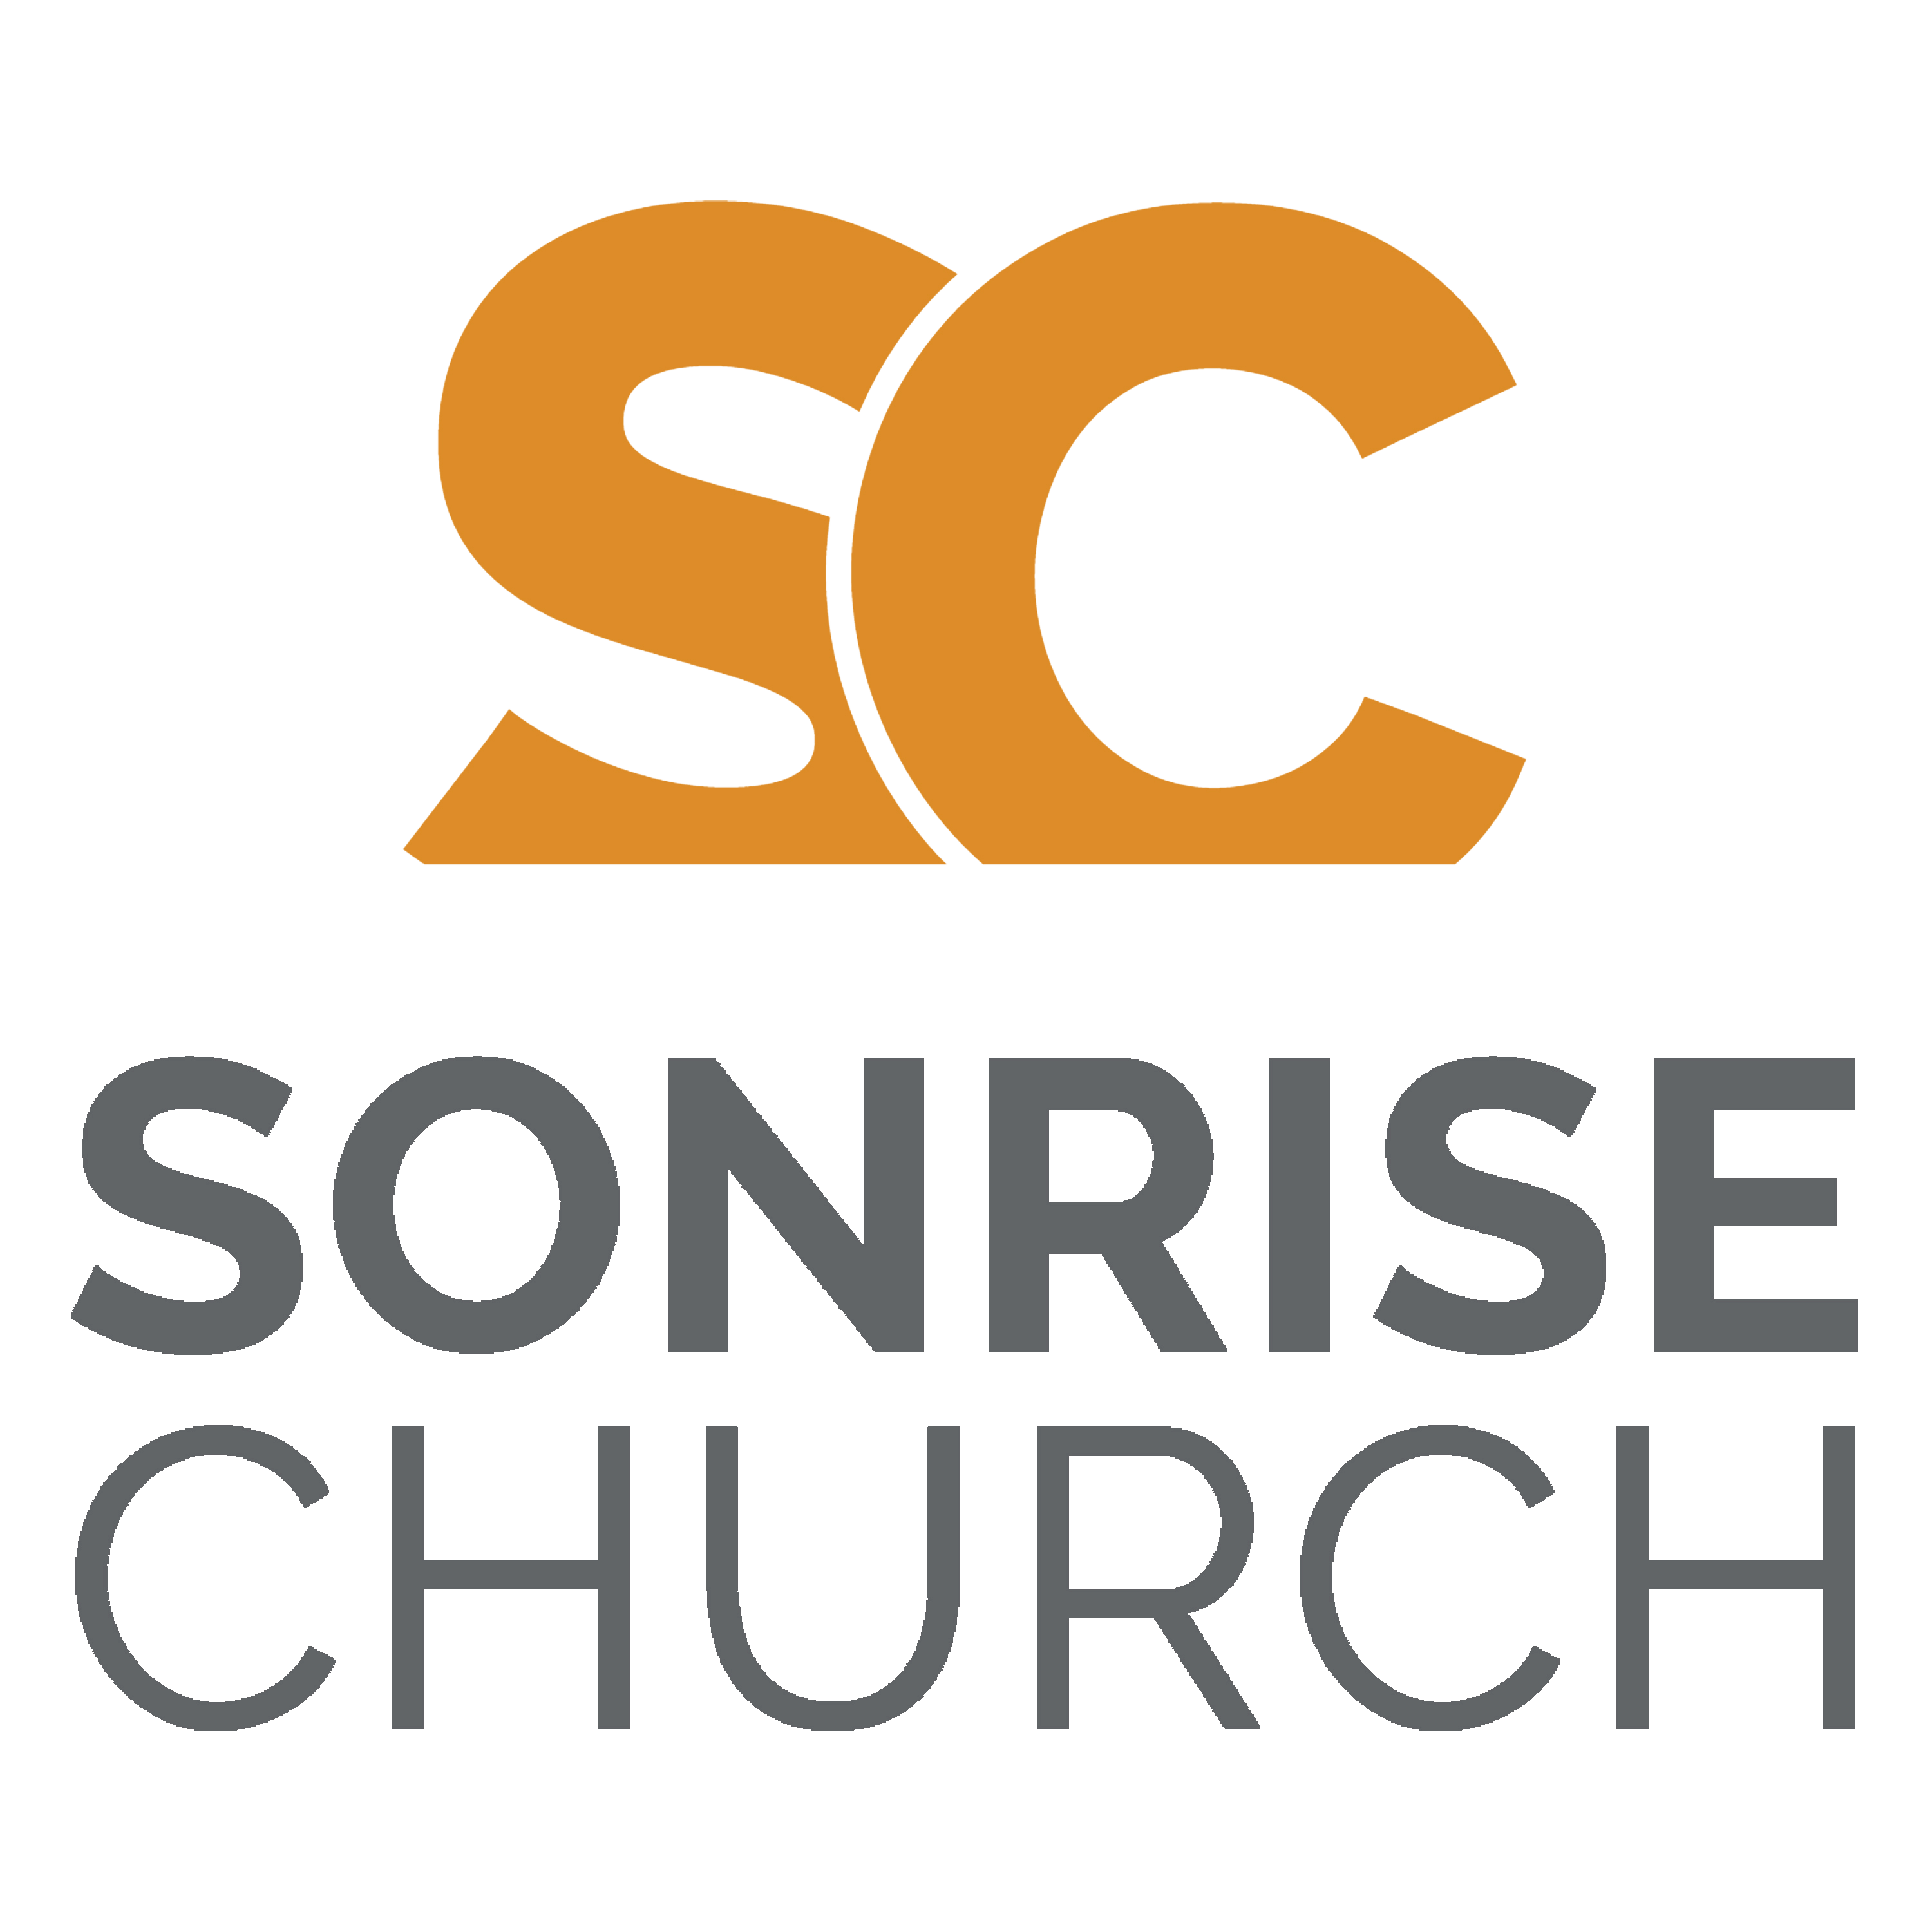 Sonrise Church